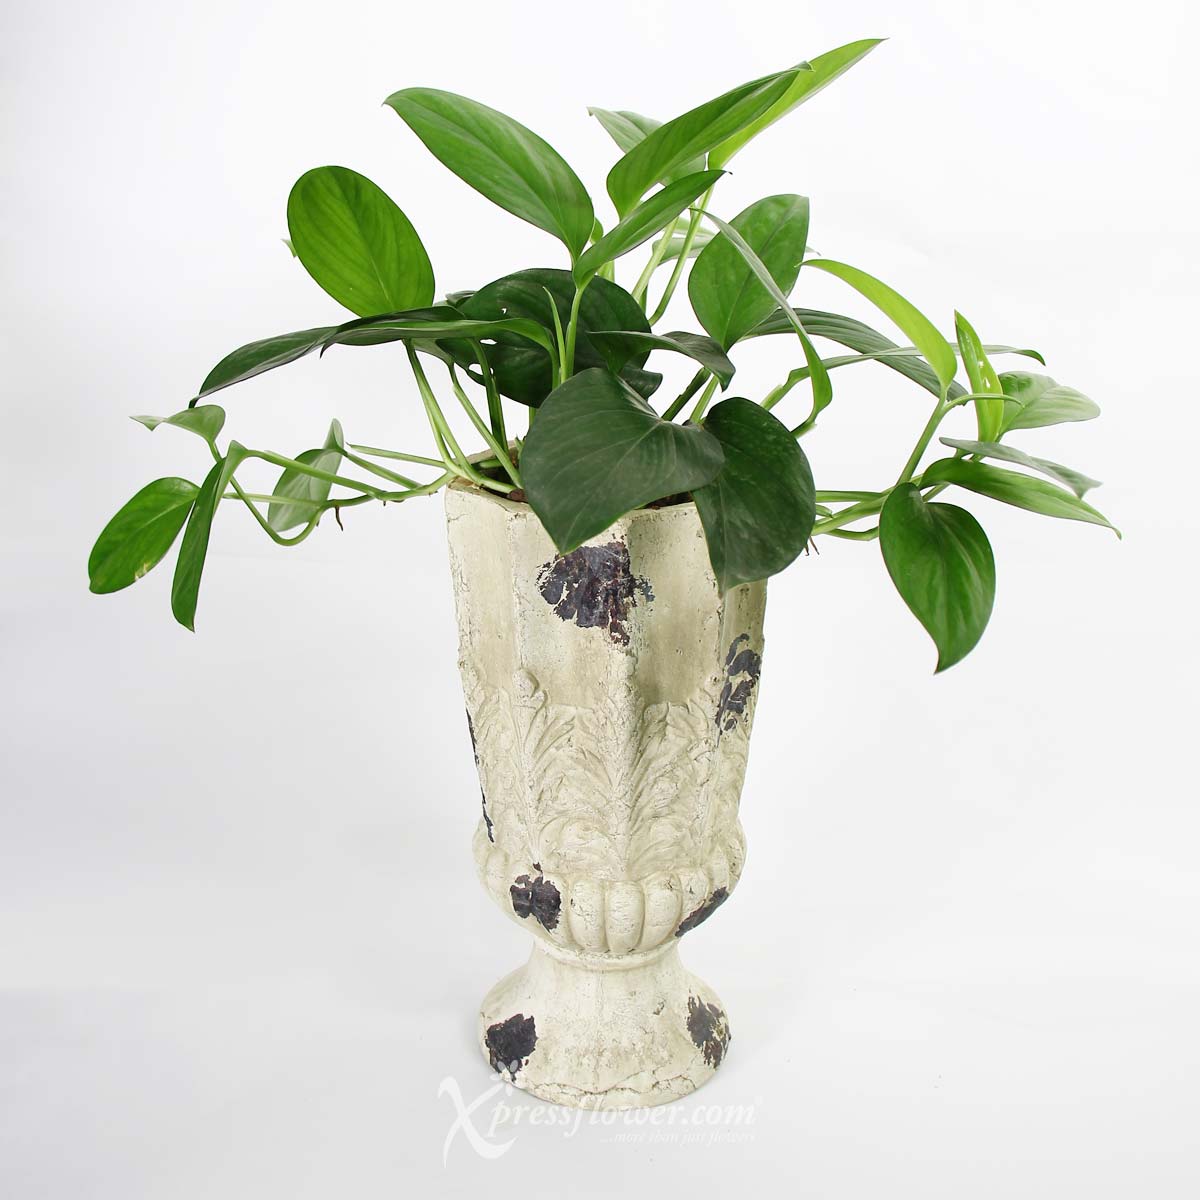 PS2123 Flourishing Renaissance (Epipremnum Pinnatum Plant) 5a